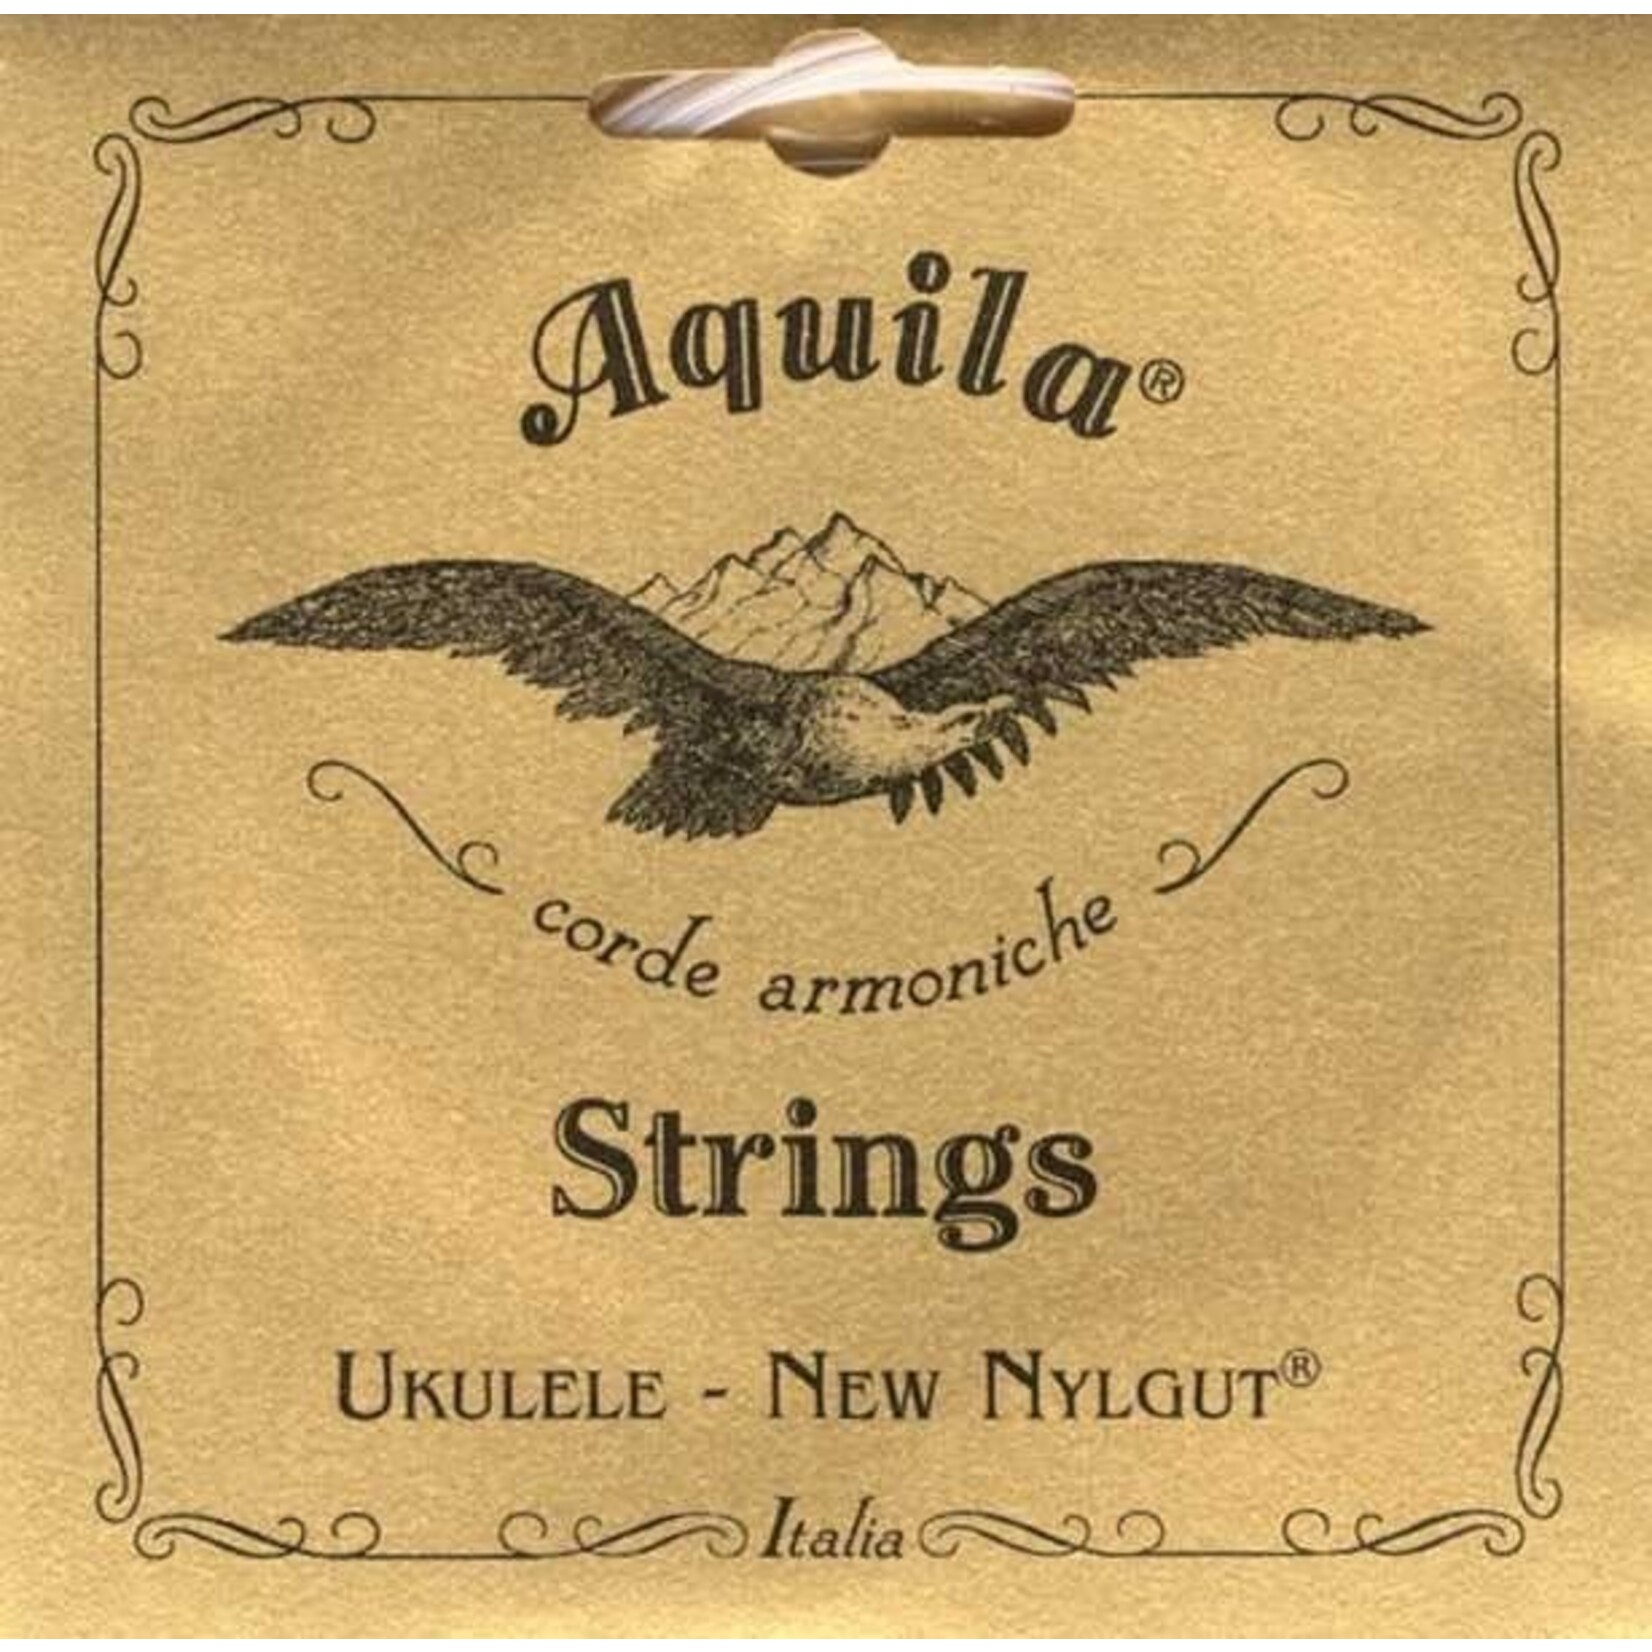 Aquila Aquila Tenor Uke Strings Low G